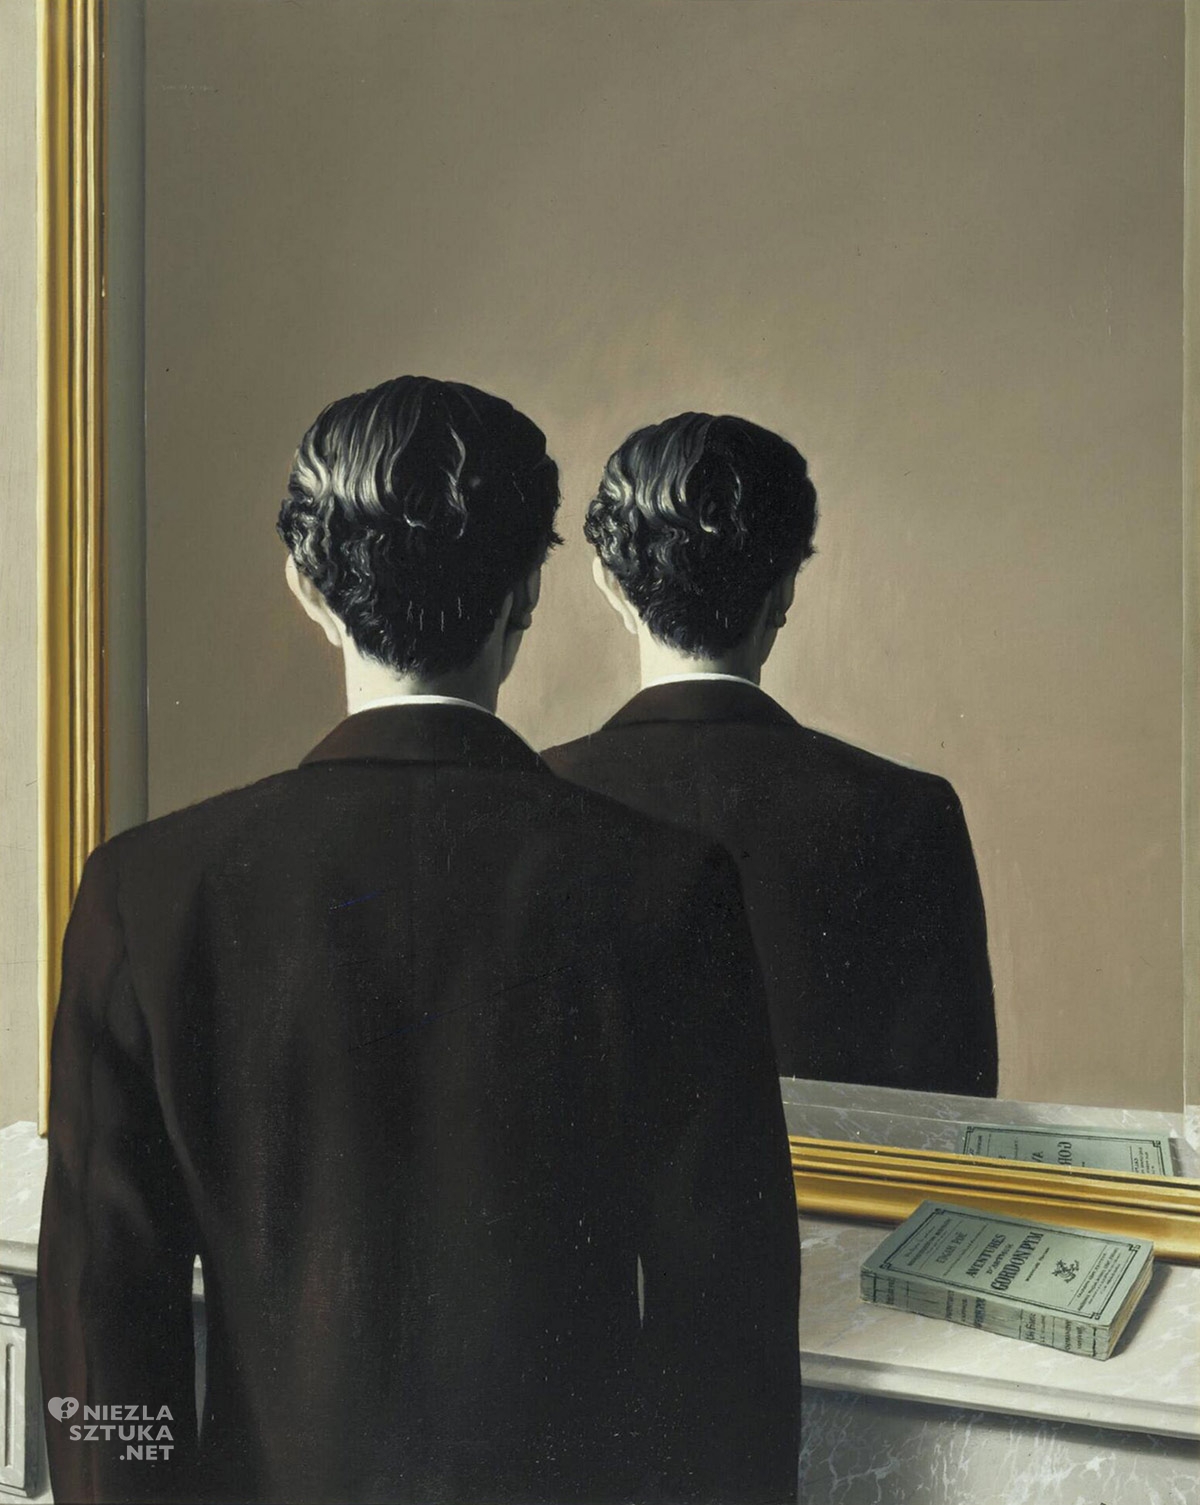 René Magritte, Reprodukcja zakazana, surrealizm, Belgia, Niezła Sztuka